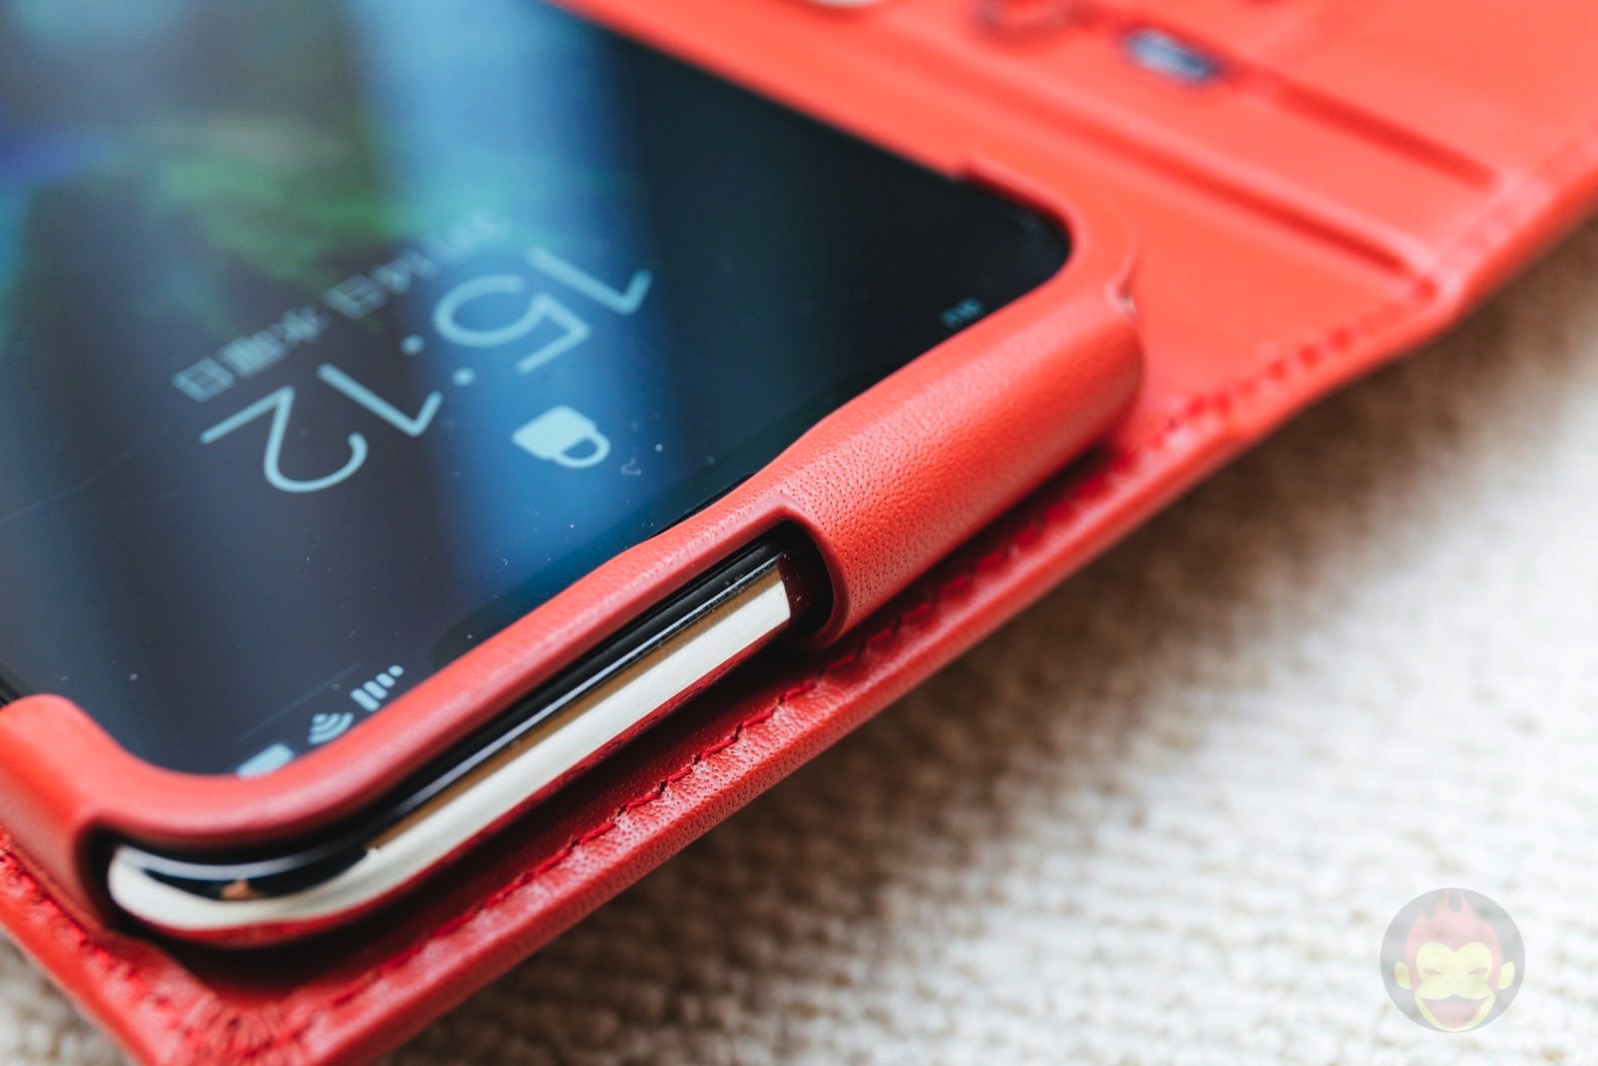 GRAMAS-Full-Leather-Case-Red-for-iPhoneX-SIM-PIN-05.jpg